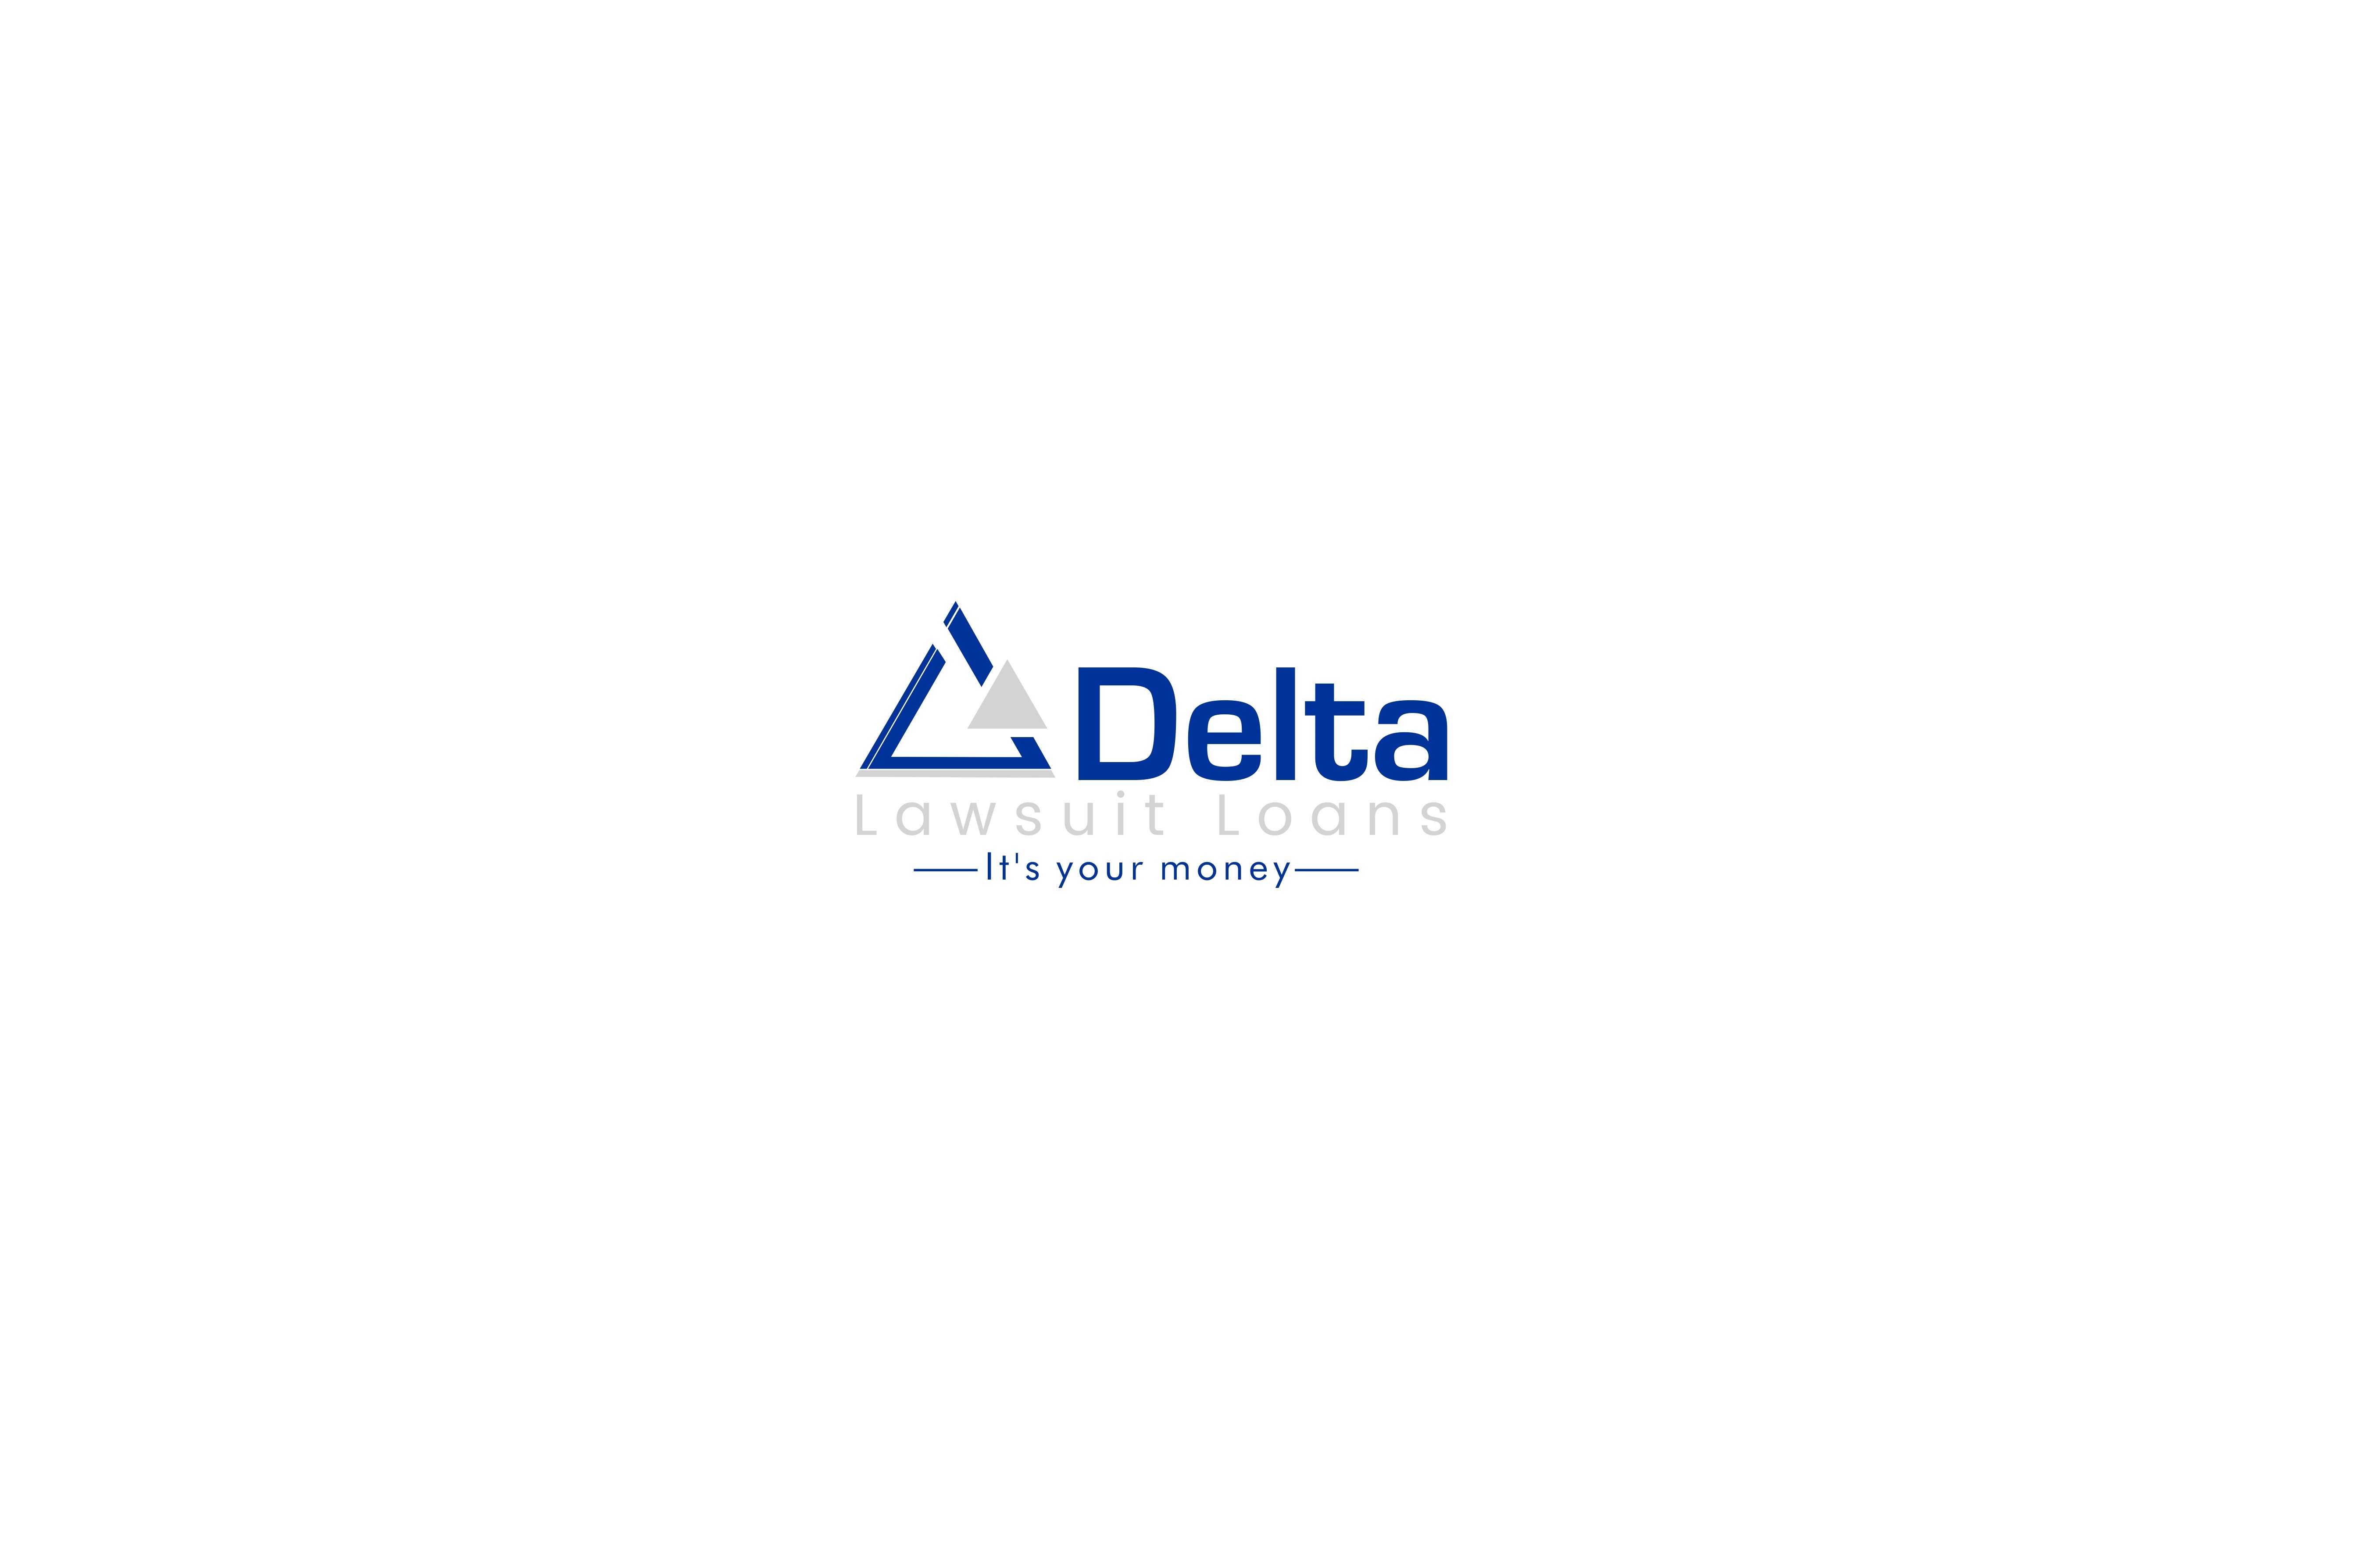  Delta Lawsuit Loans